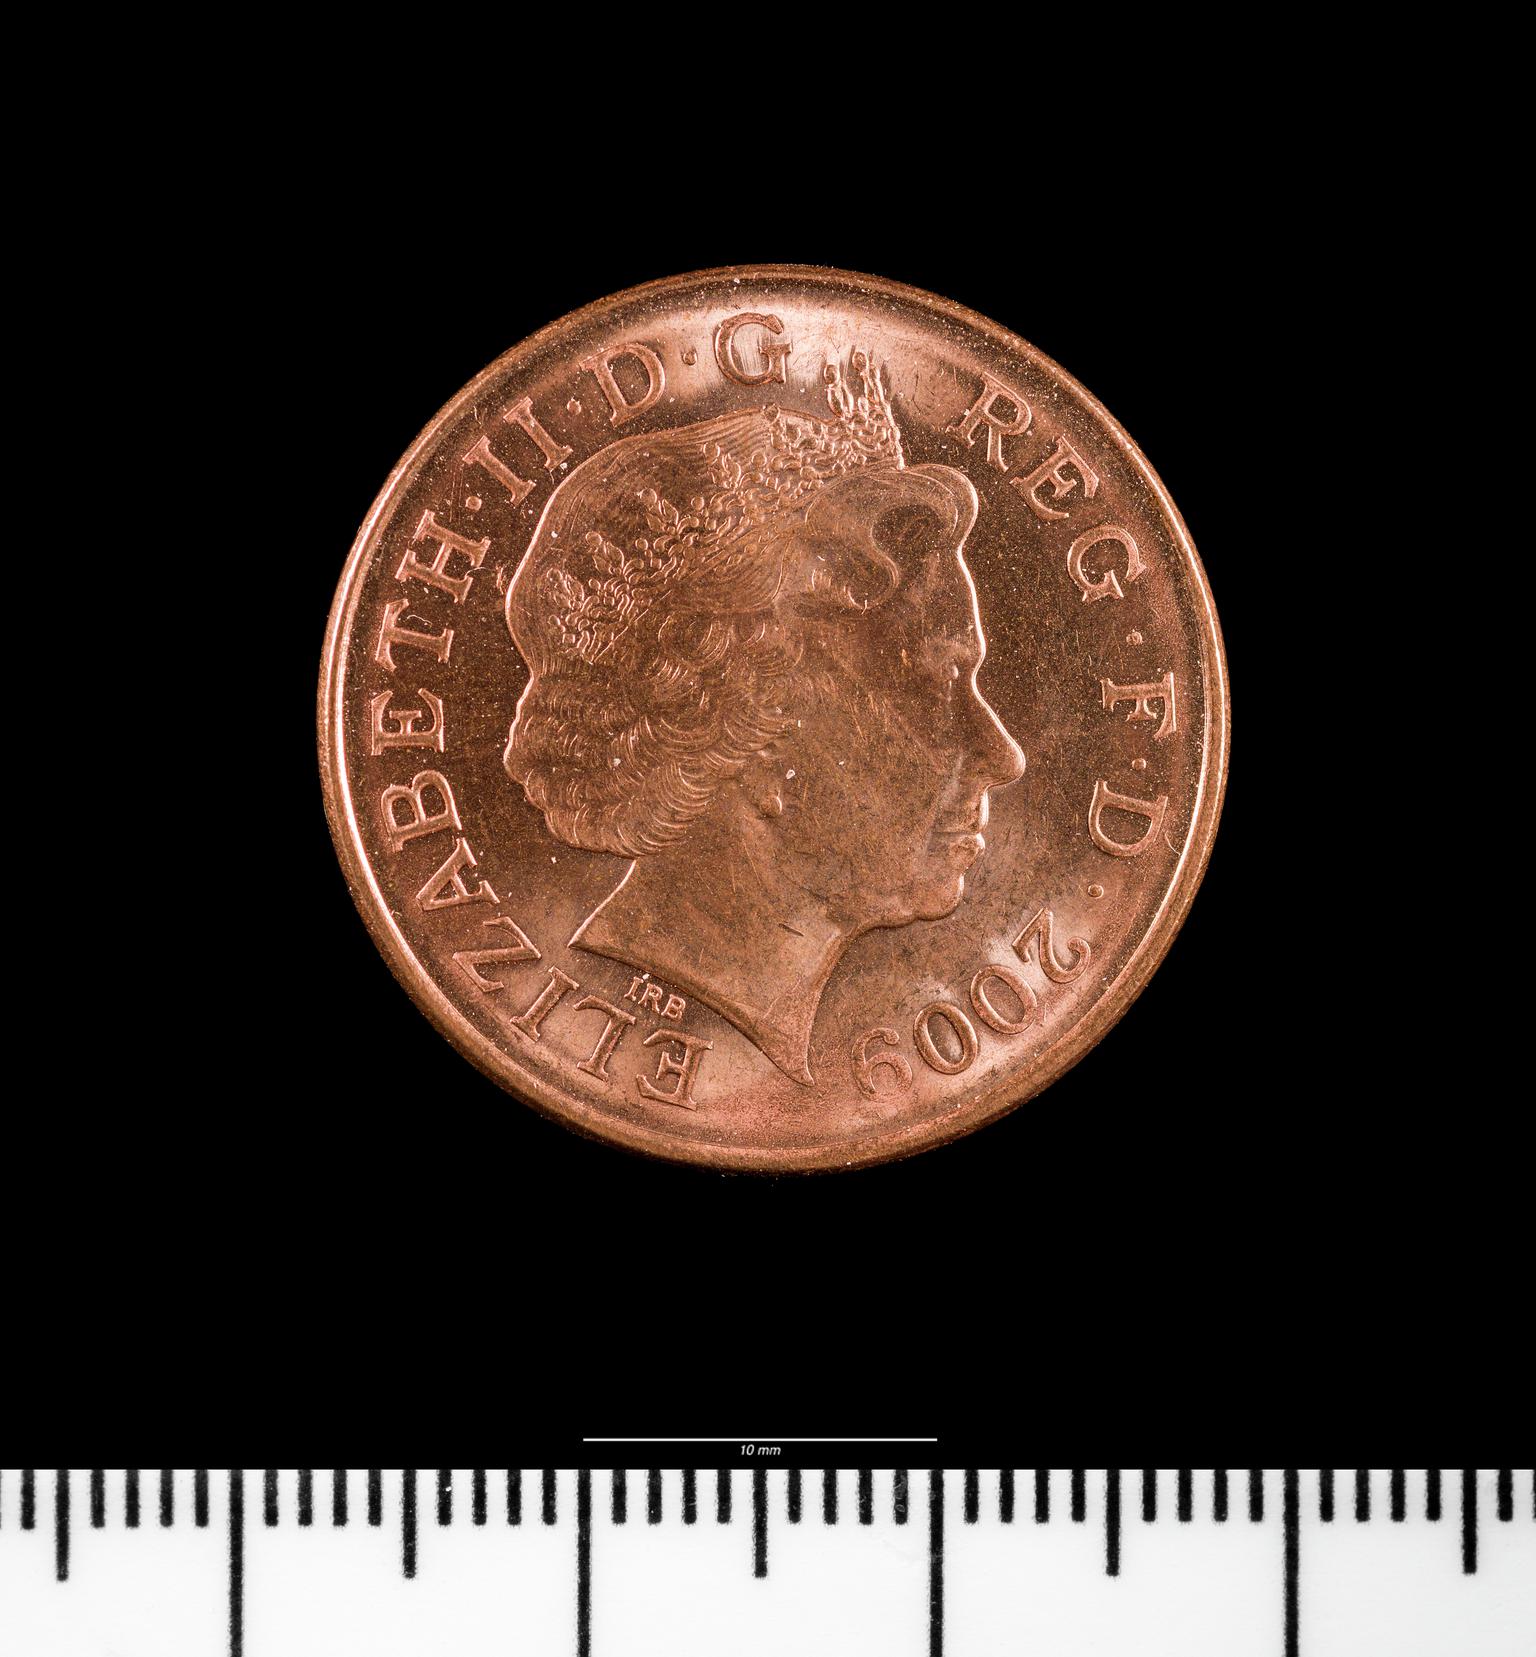 Elizabeth II two pence